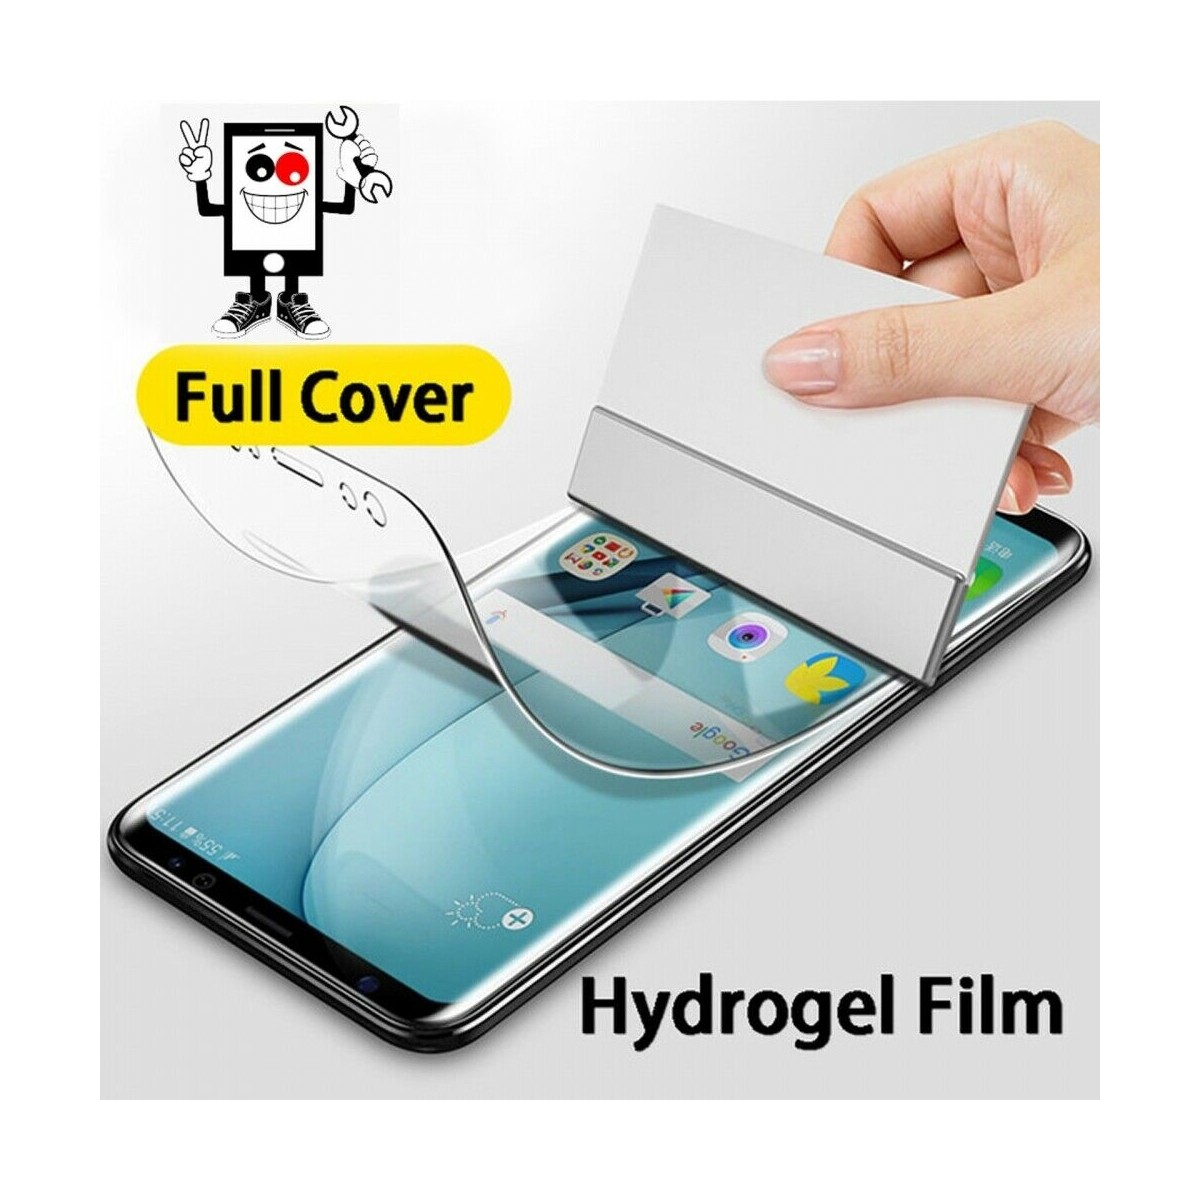 Protector de Pantalla Autorreparable de Hidrogel para LG G7 Fit